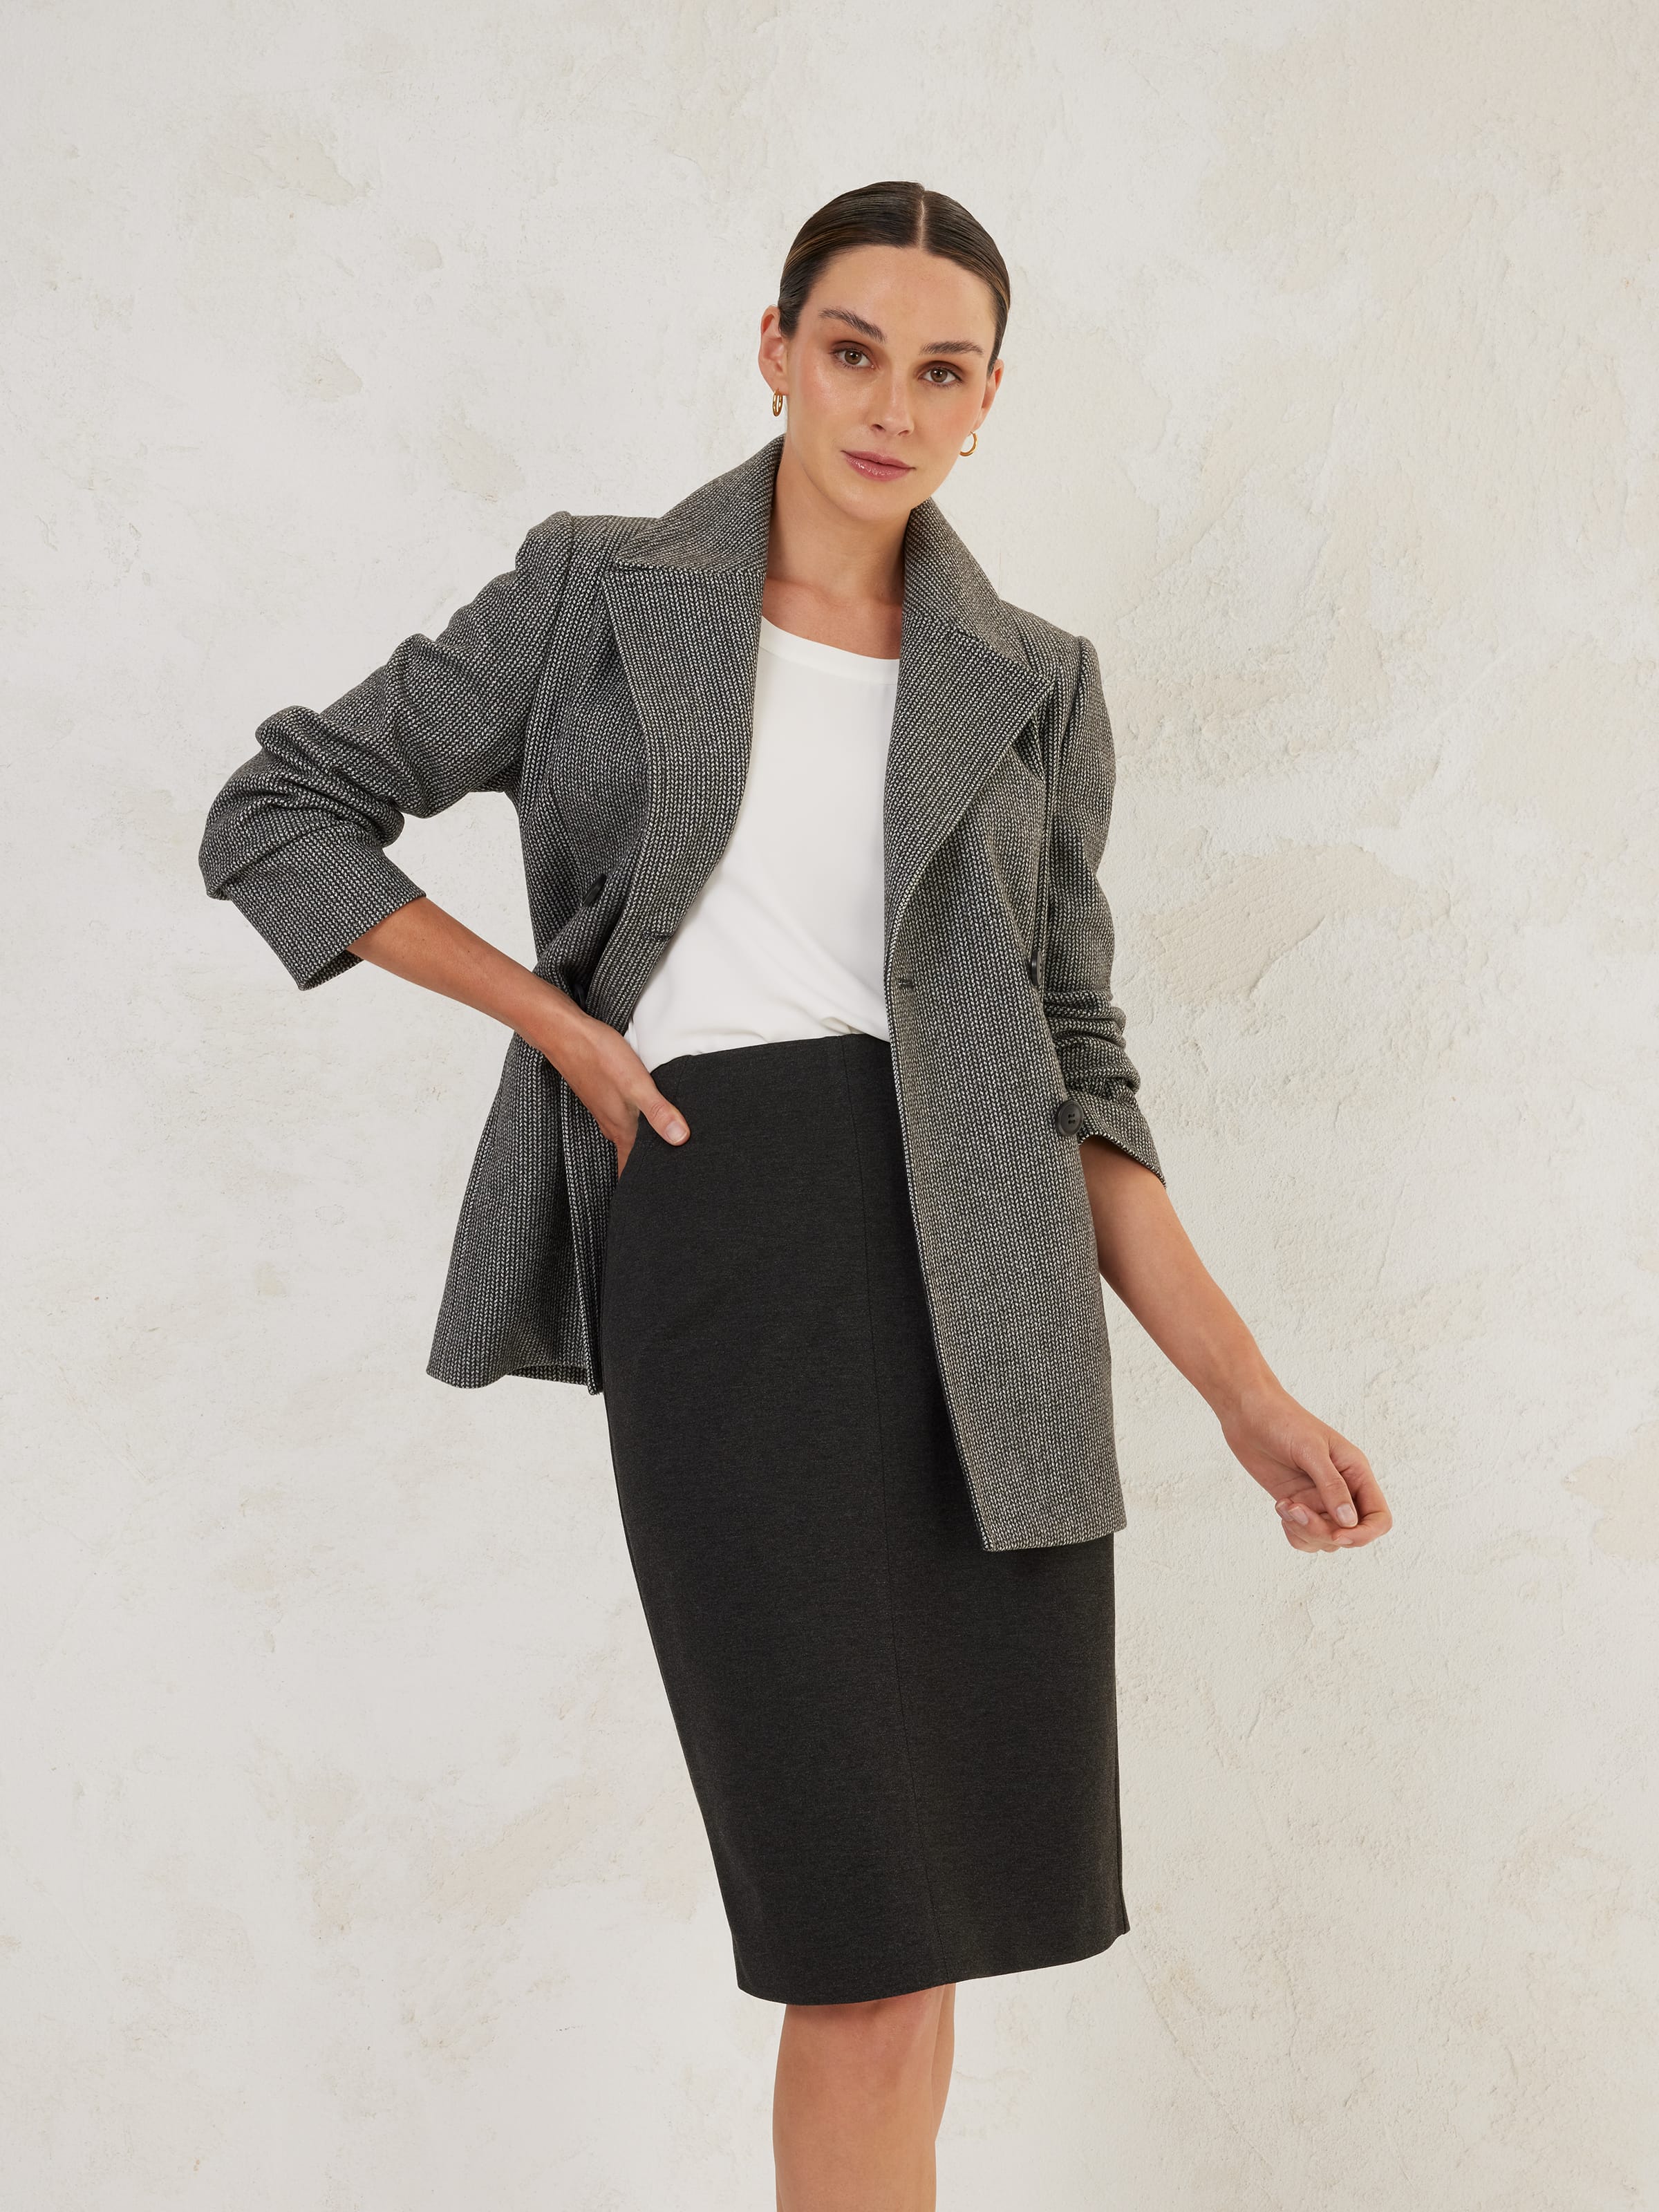 Work Jackets - Suit Jackets & Blazers for Women | Jacqui E